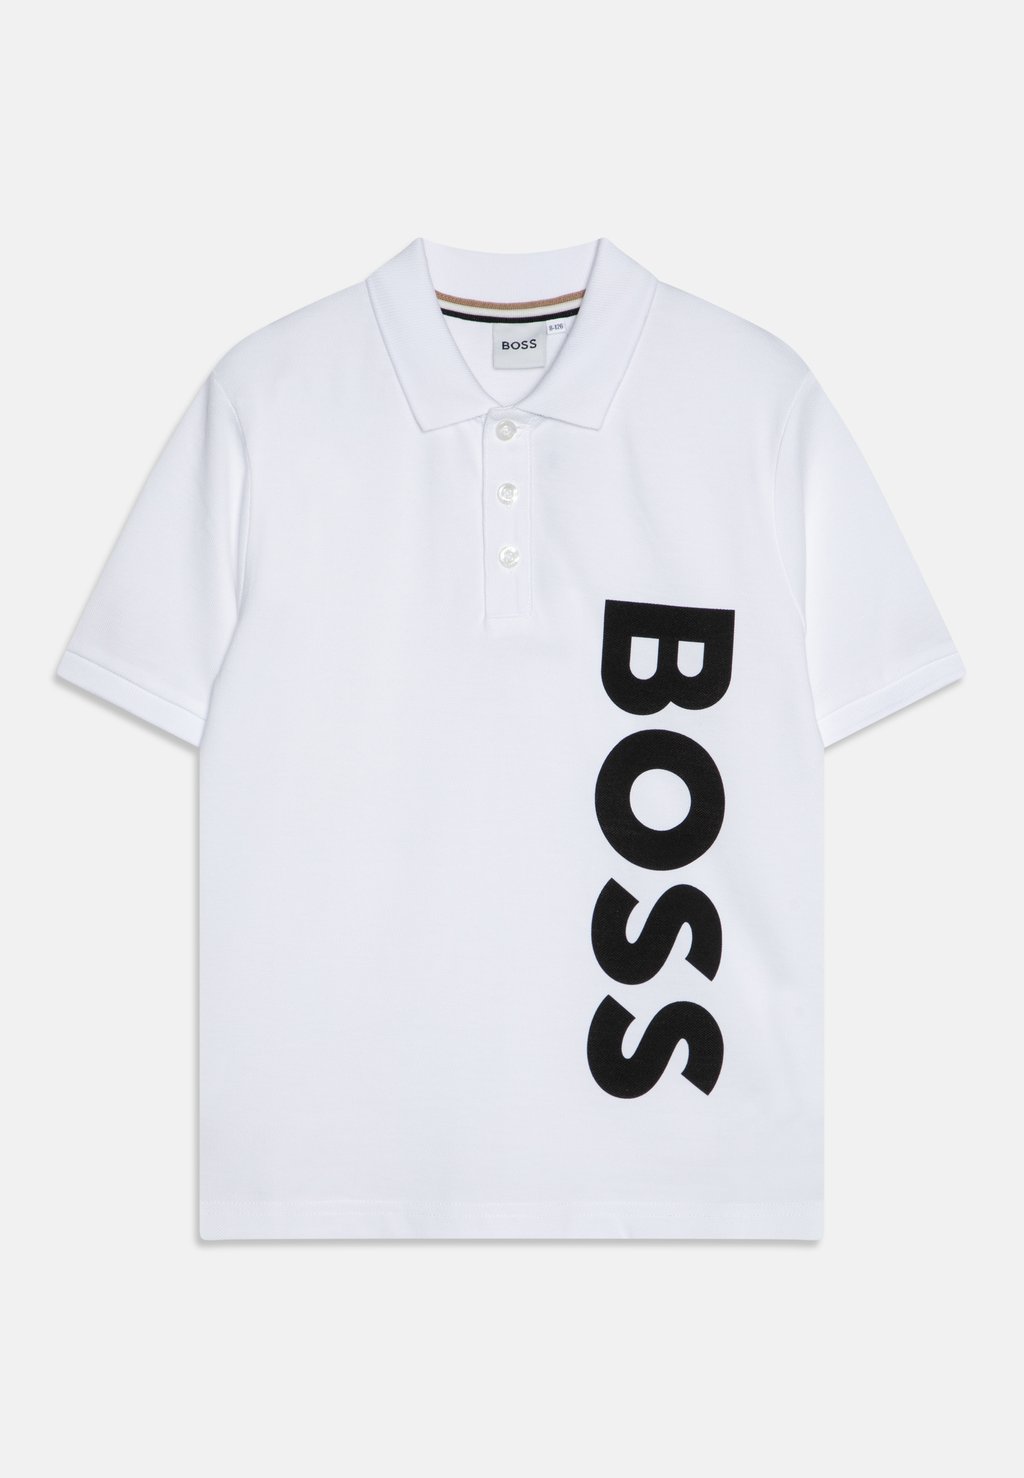 Рубашка-поло SHORT SLEEVE BOSS Kidswear, цвет white рубашка поло short sleeve boss kidswear цвет white